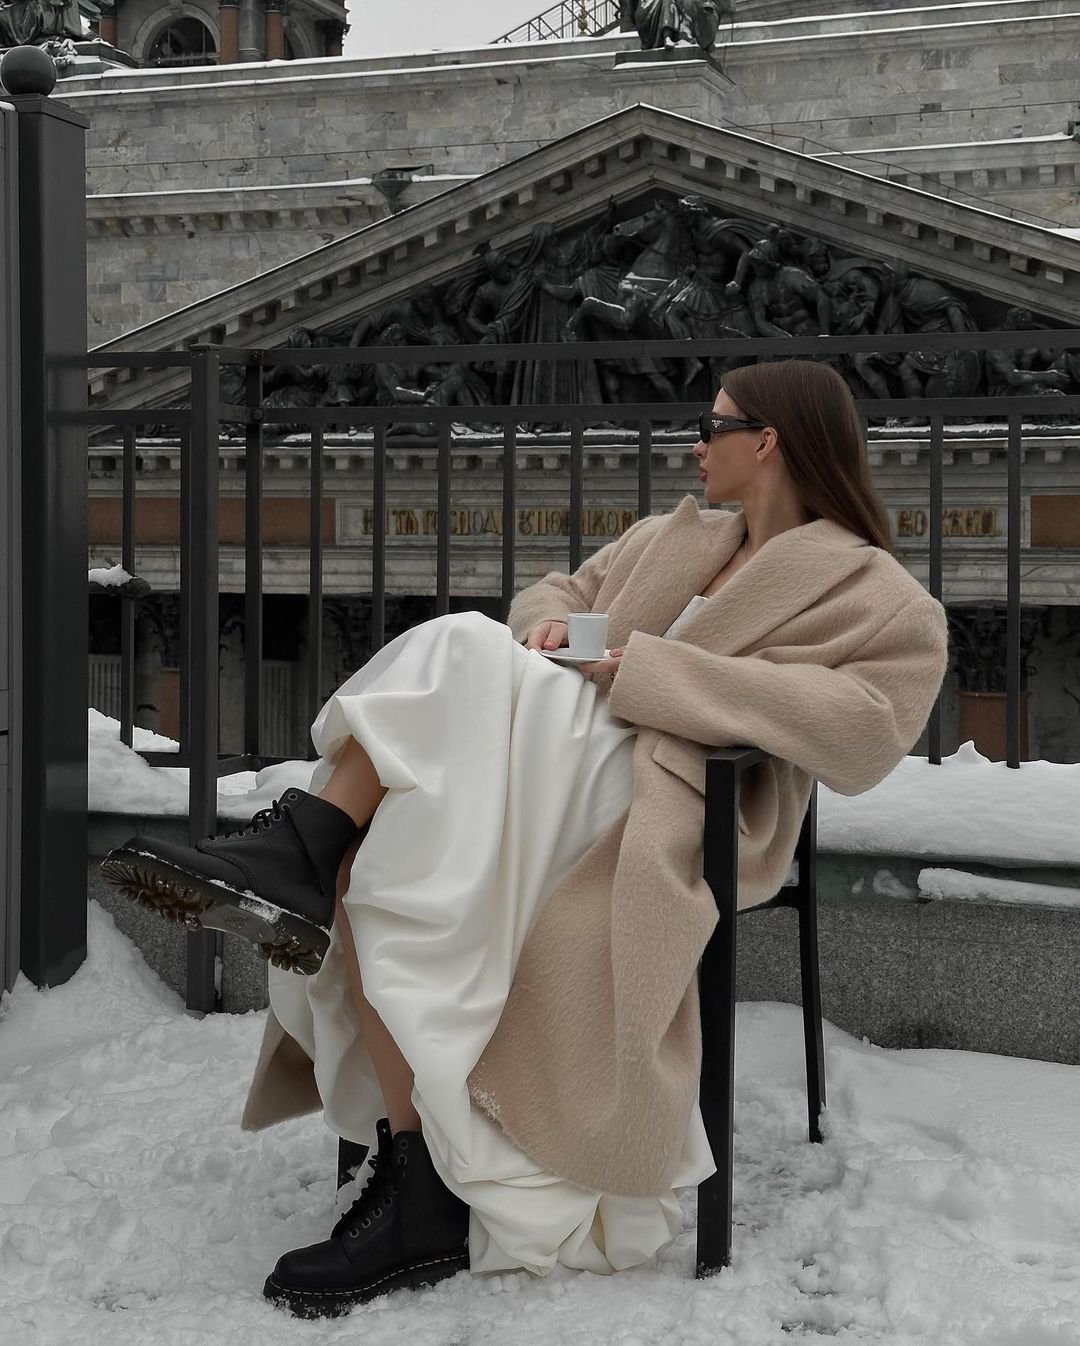 Daria Shcherbakova - vestido branco trench coat coturno preto - coturnos - outono inverno - Milão - https://stealthelook.com.br